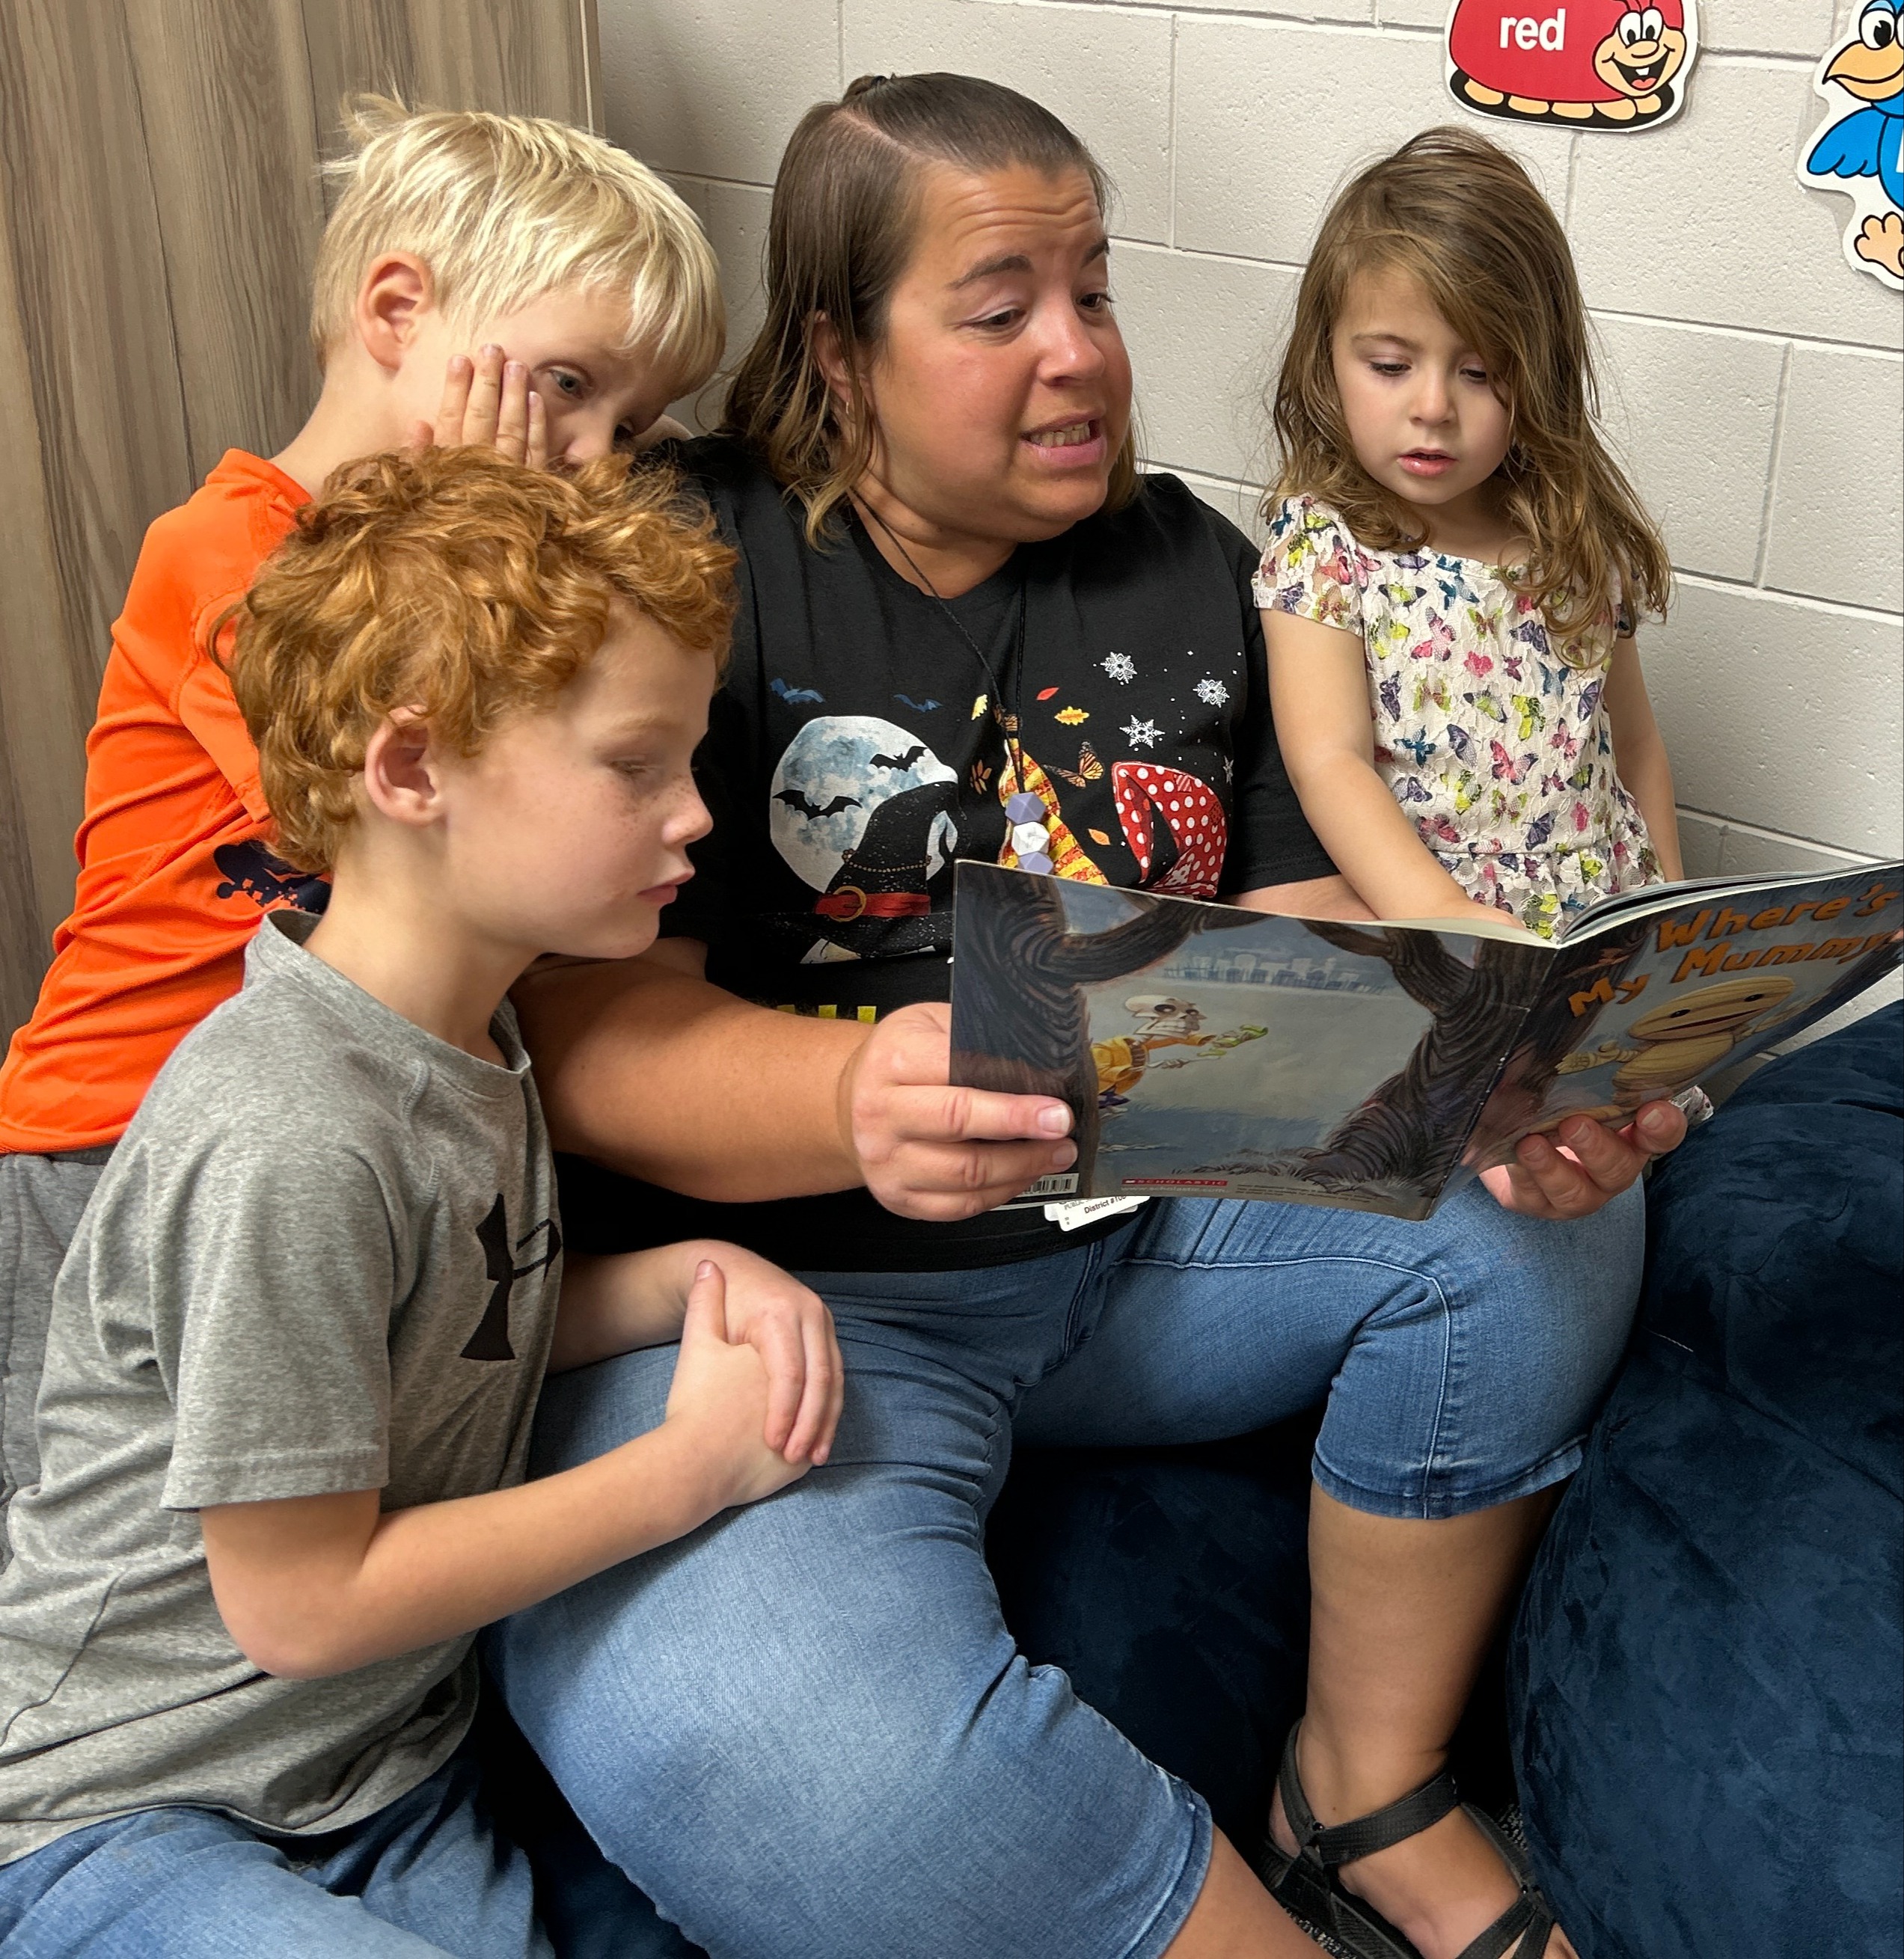 Teacher reading to kids